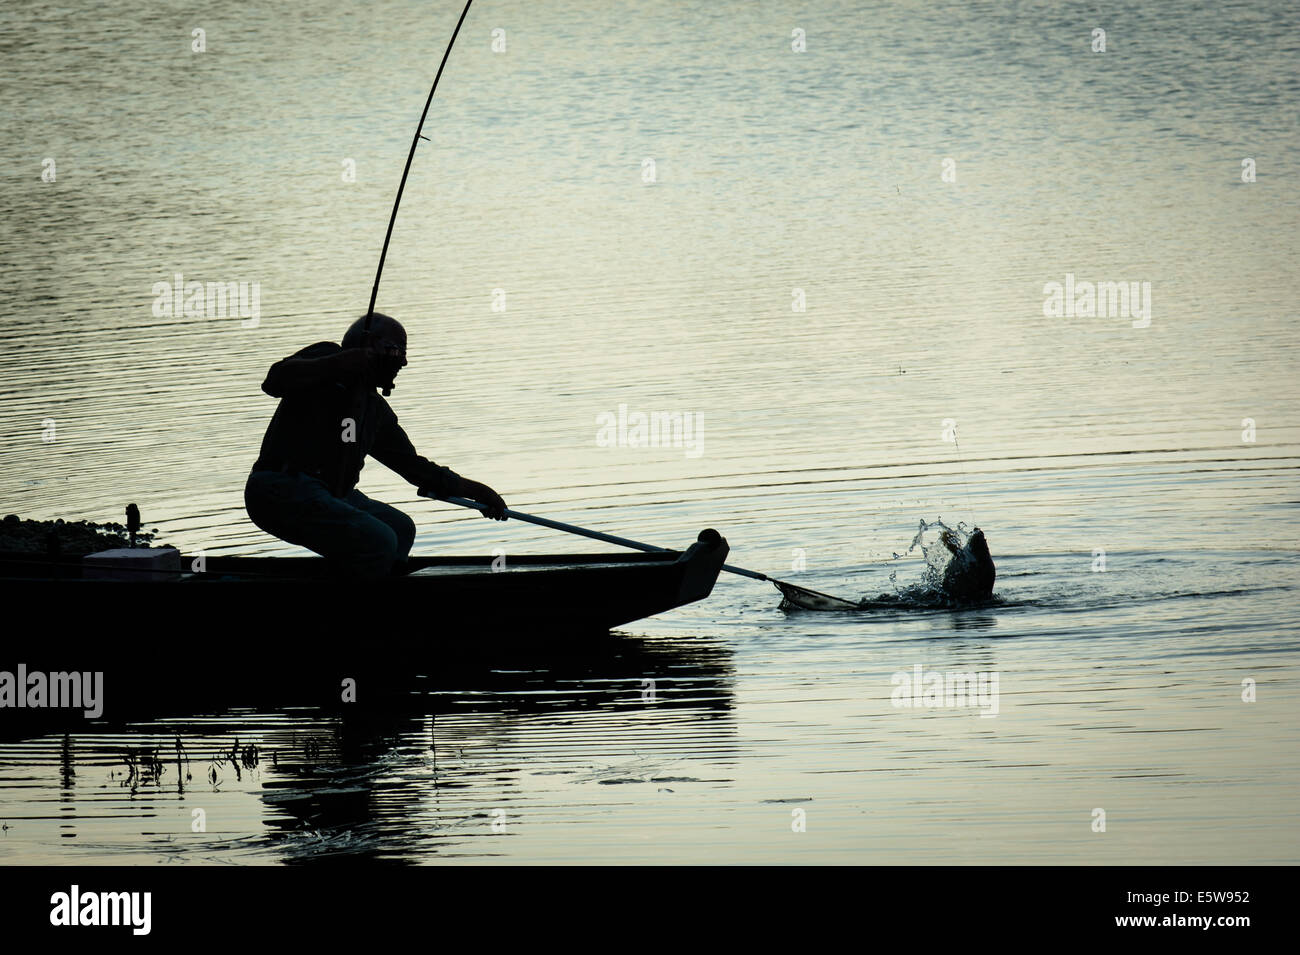 Fisherman In Boat Catches Big Fish On Twilight Lake Stock Photo